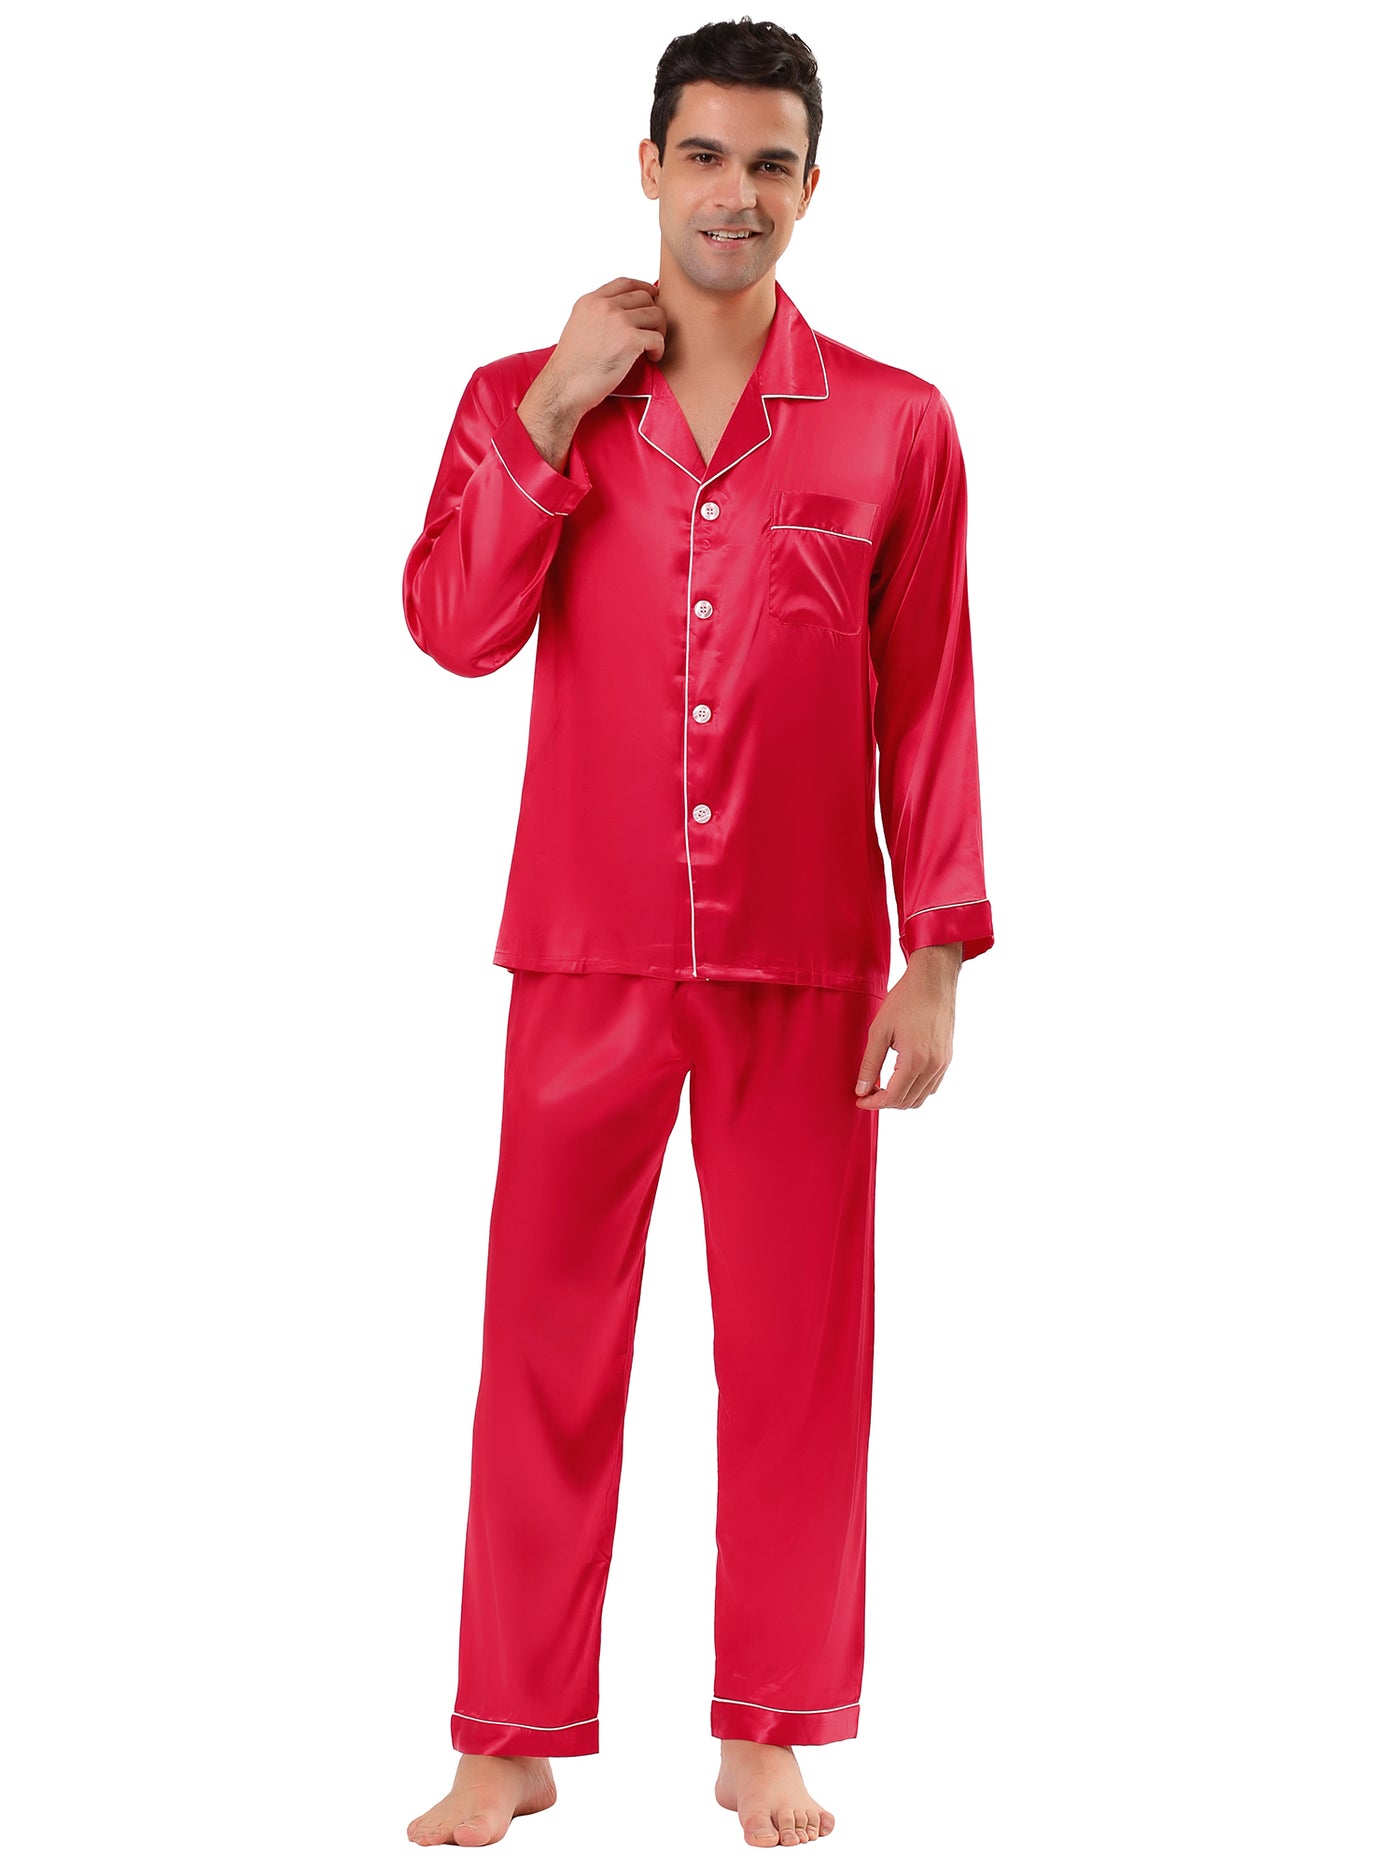 Bublédon Satin Color V Neck Button Long Sleeve Pajama Sets